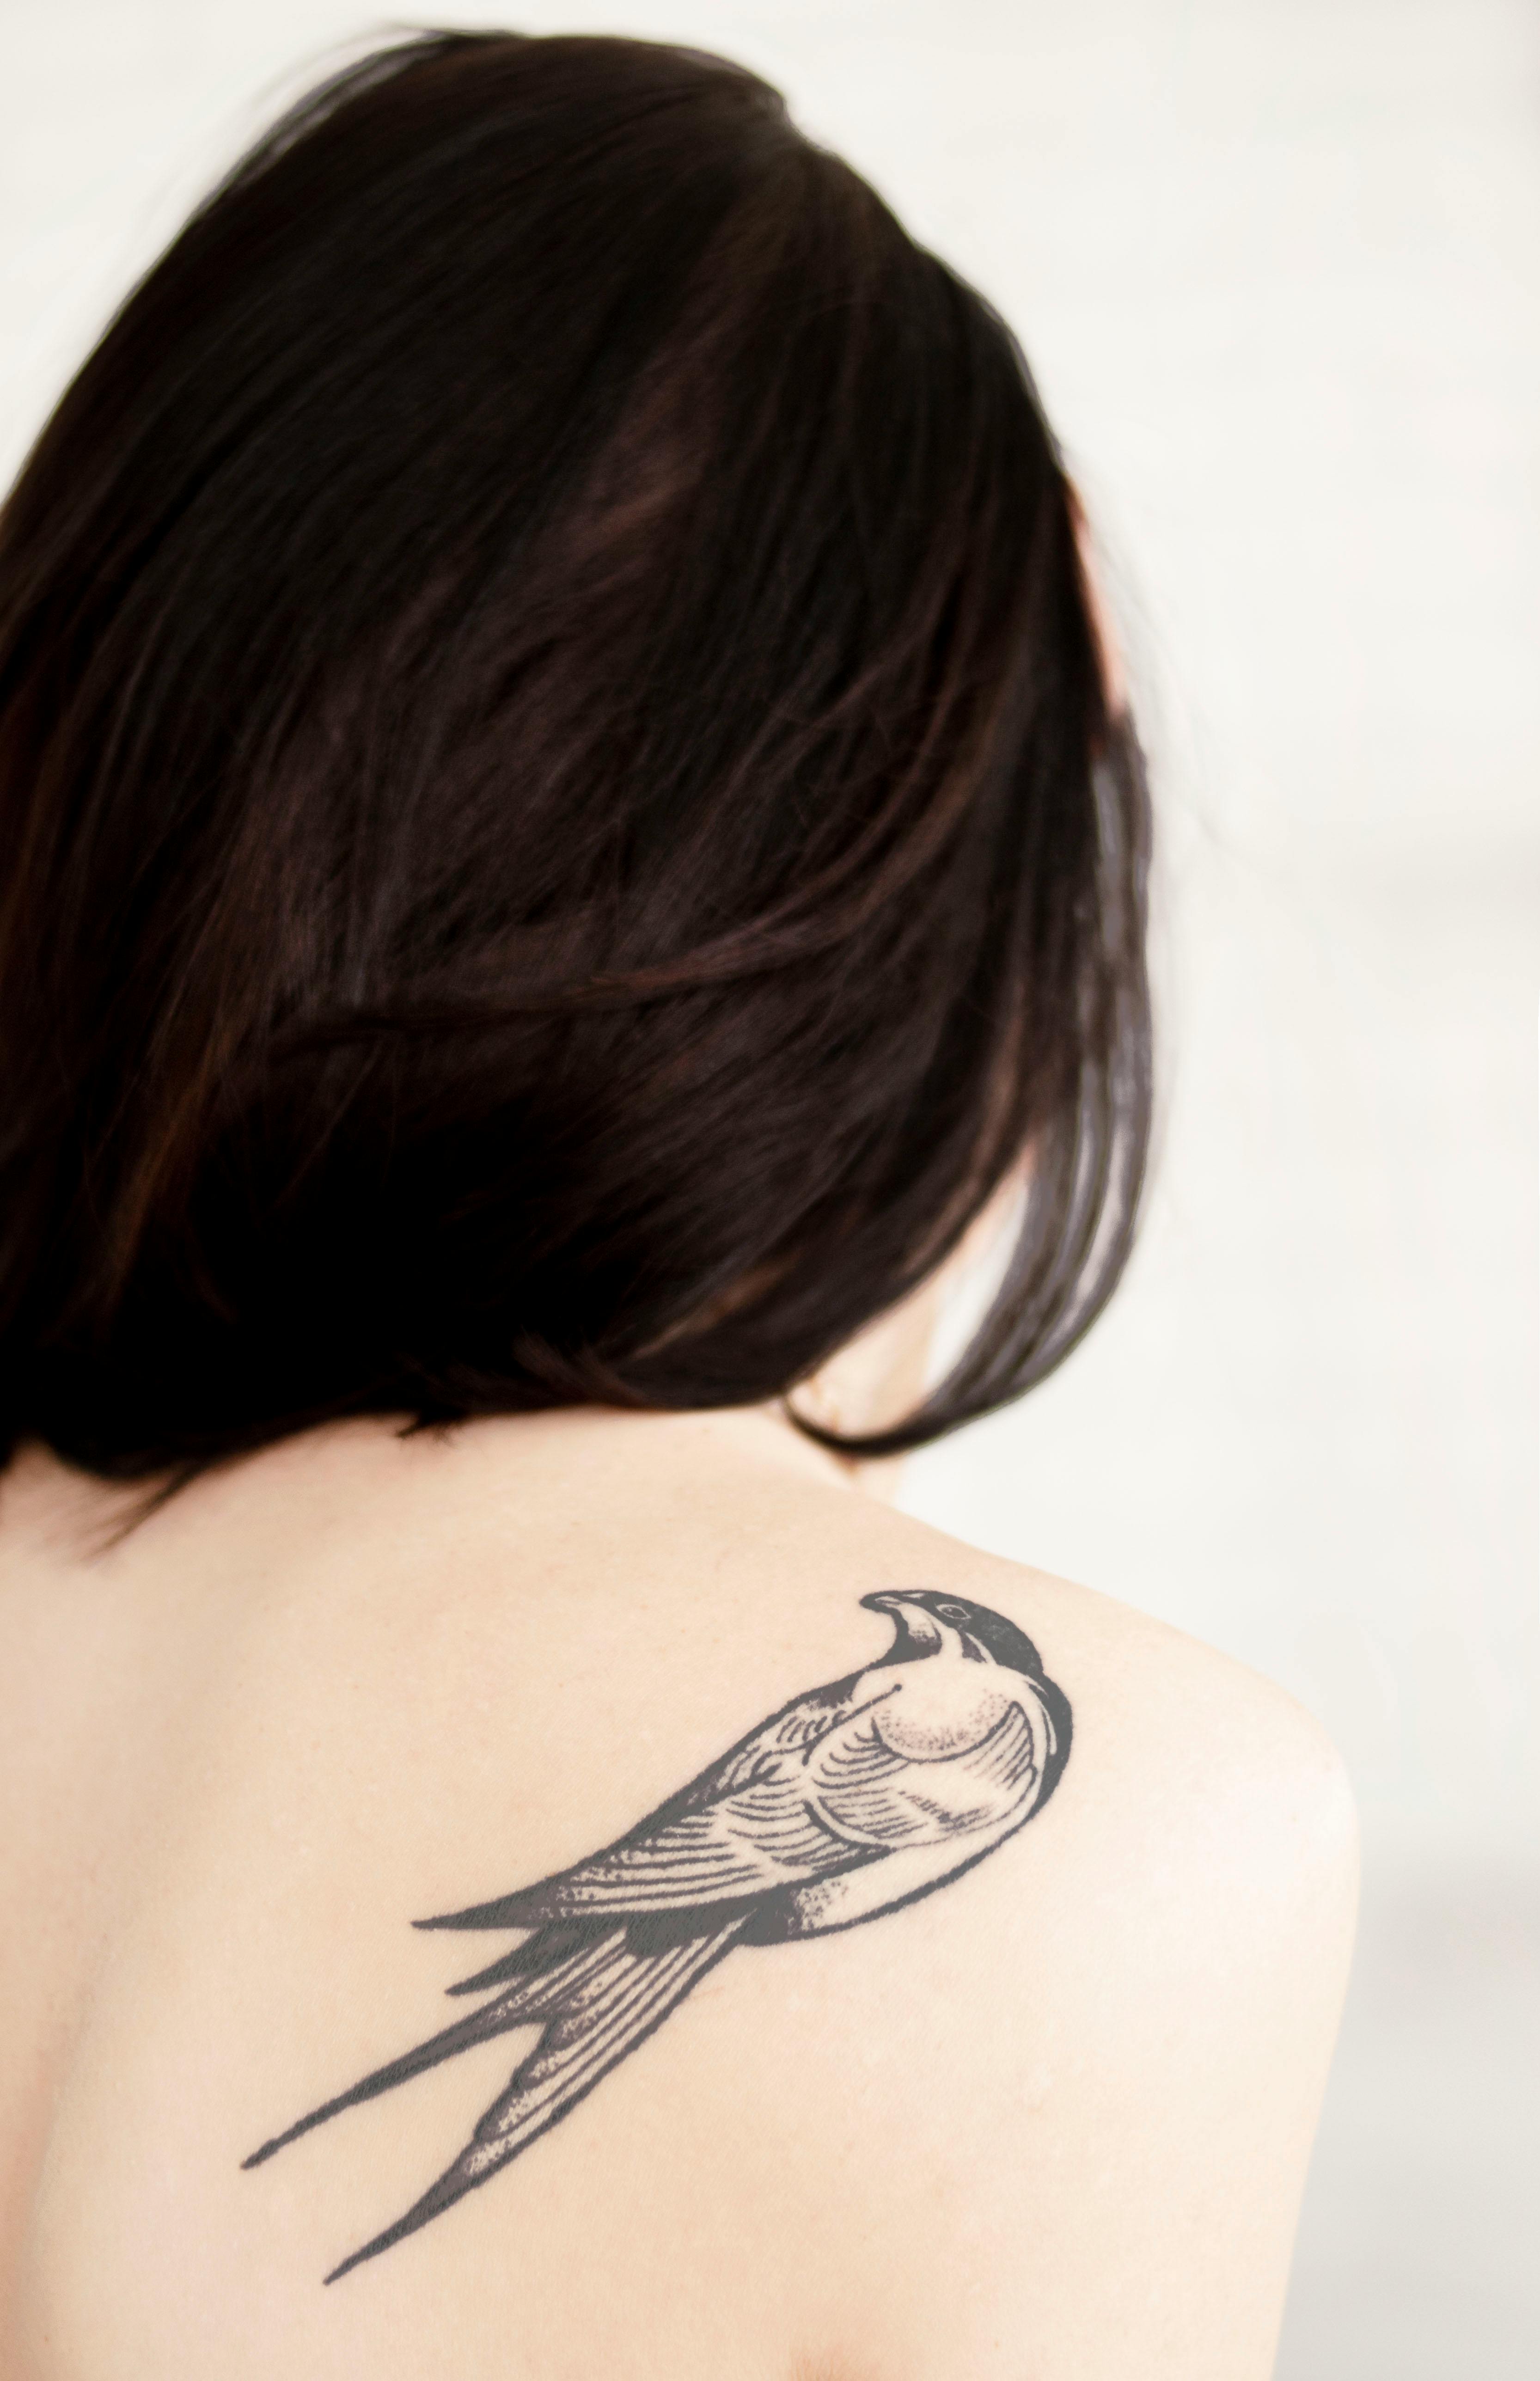 These Kookaburra Tattoos Are a Riot – The Tattooed Archivist